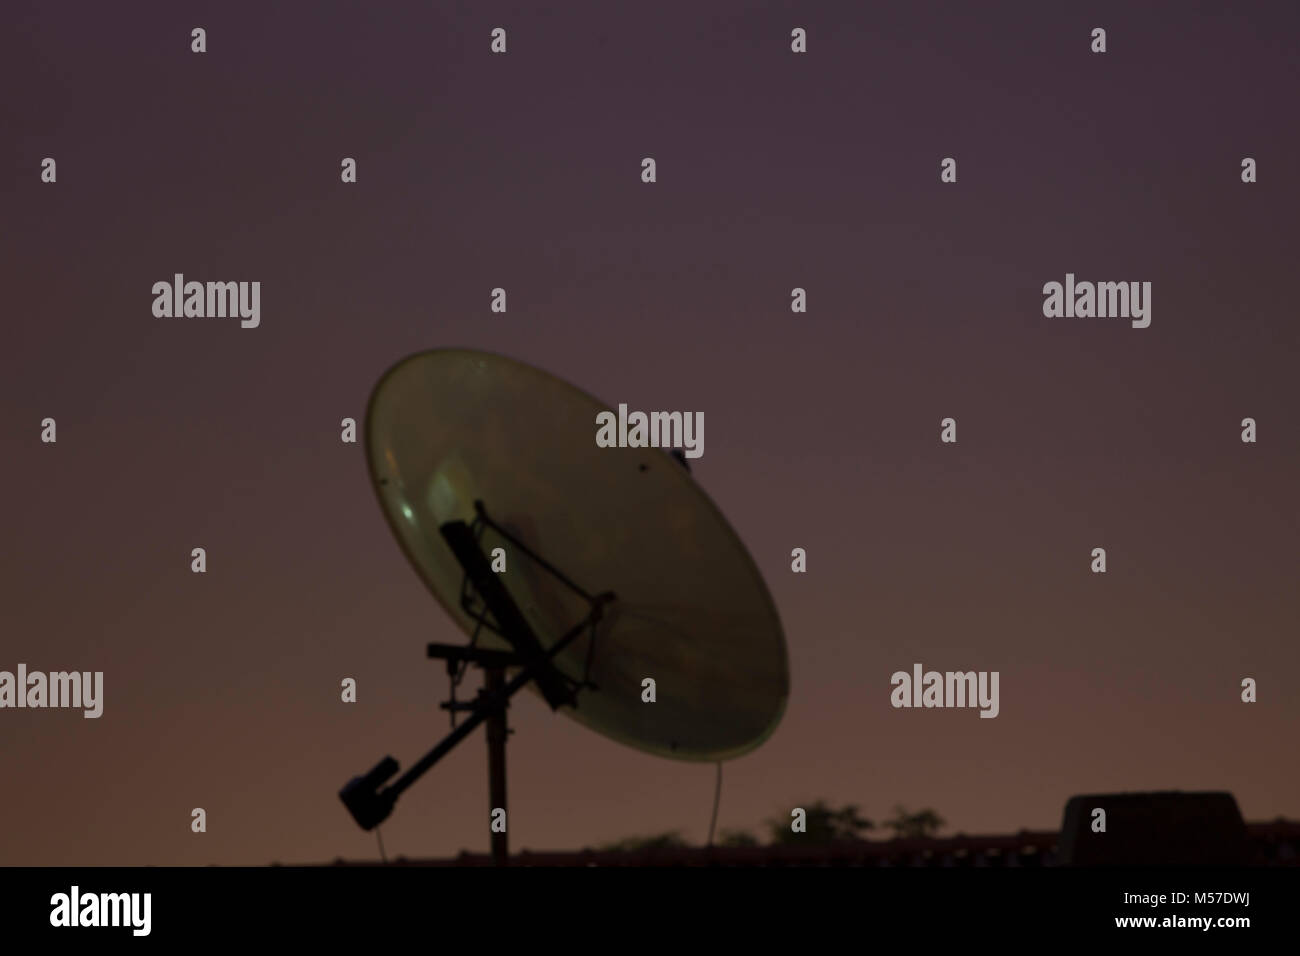 Satellite dish sky sun stars communication technology network image background for design. Stock Photo